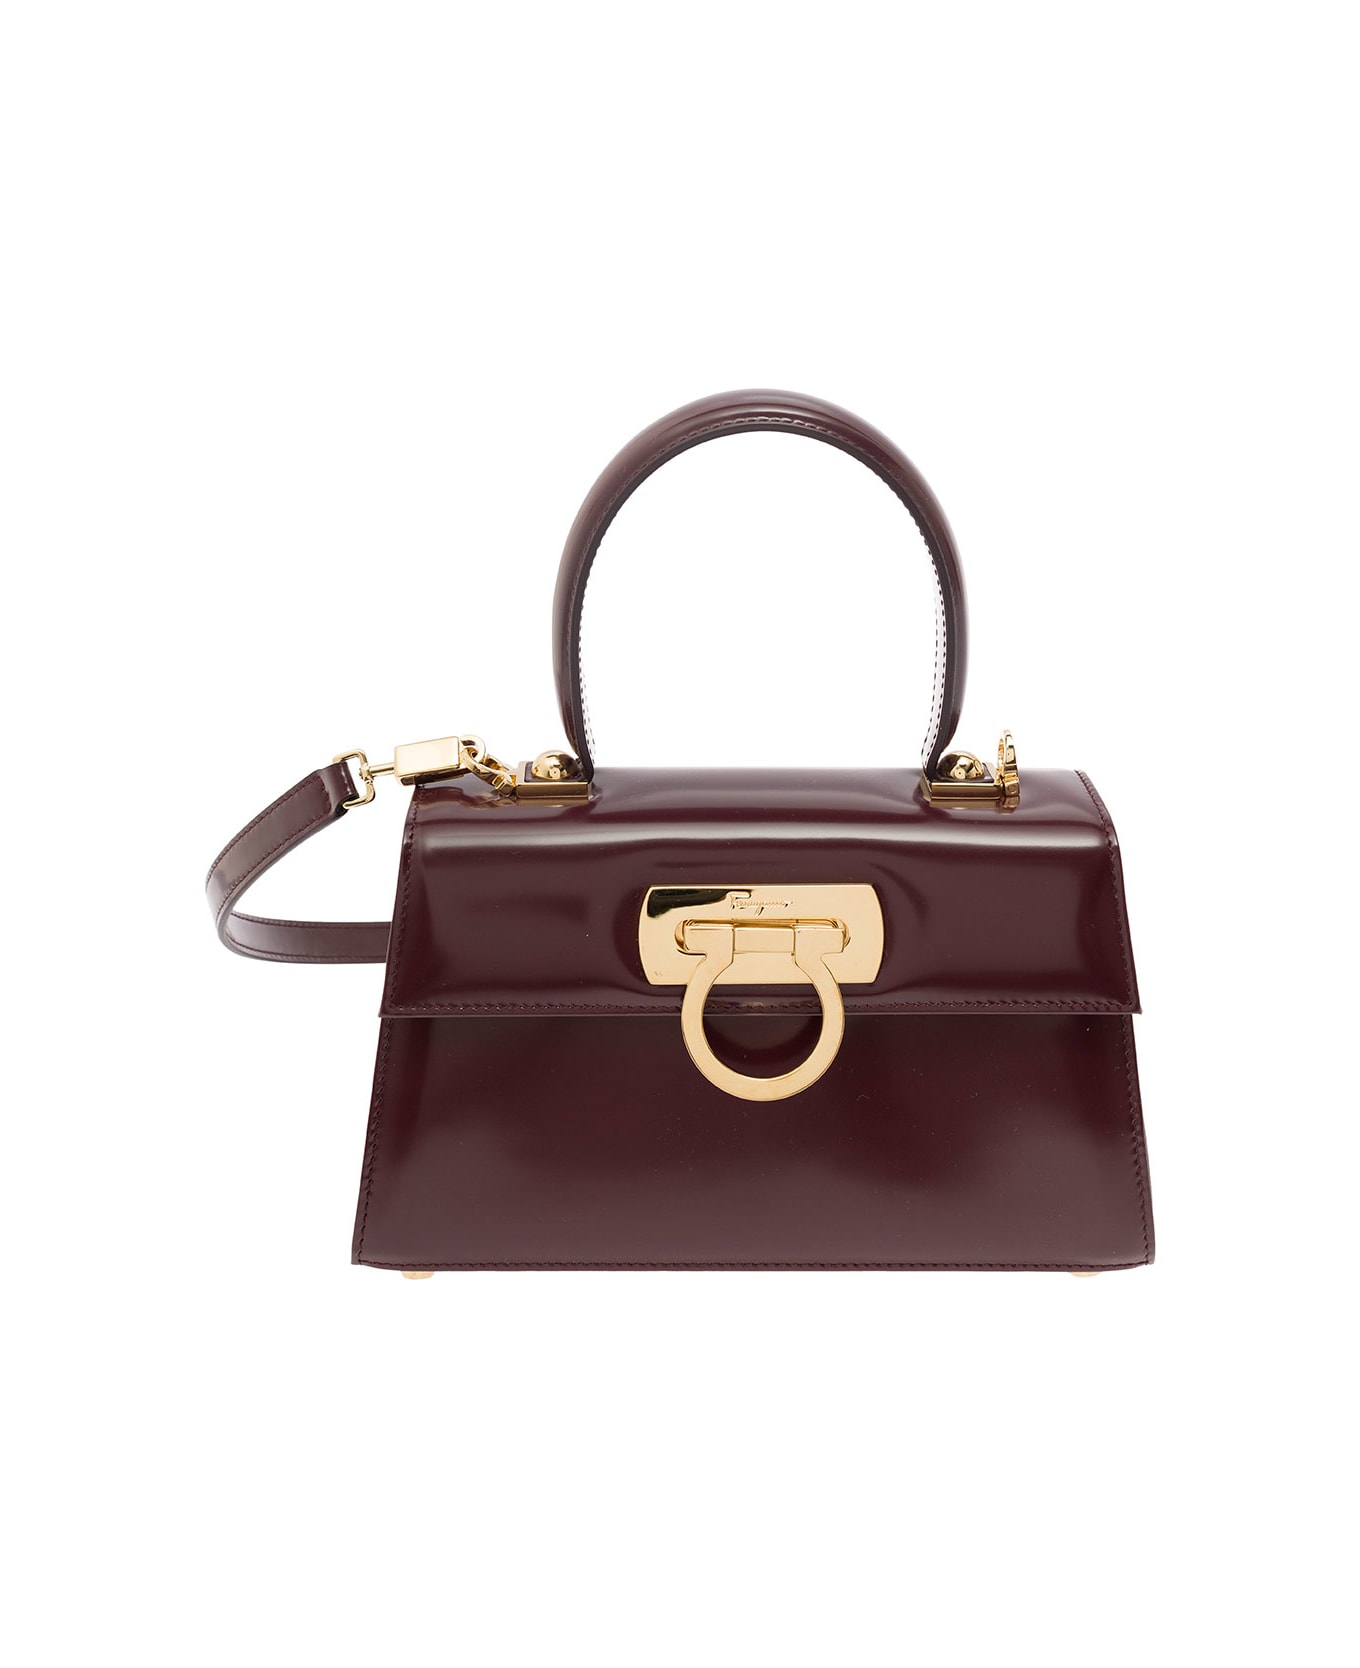 Ferragamo Bordeaux Handbag With Gancini Closure In Patent Leather Woman - Bordeaux トートバッグ